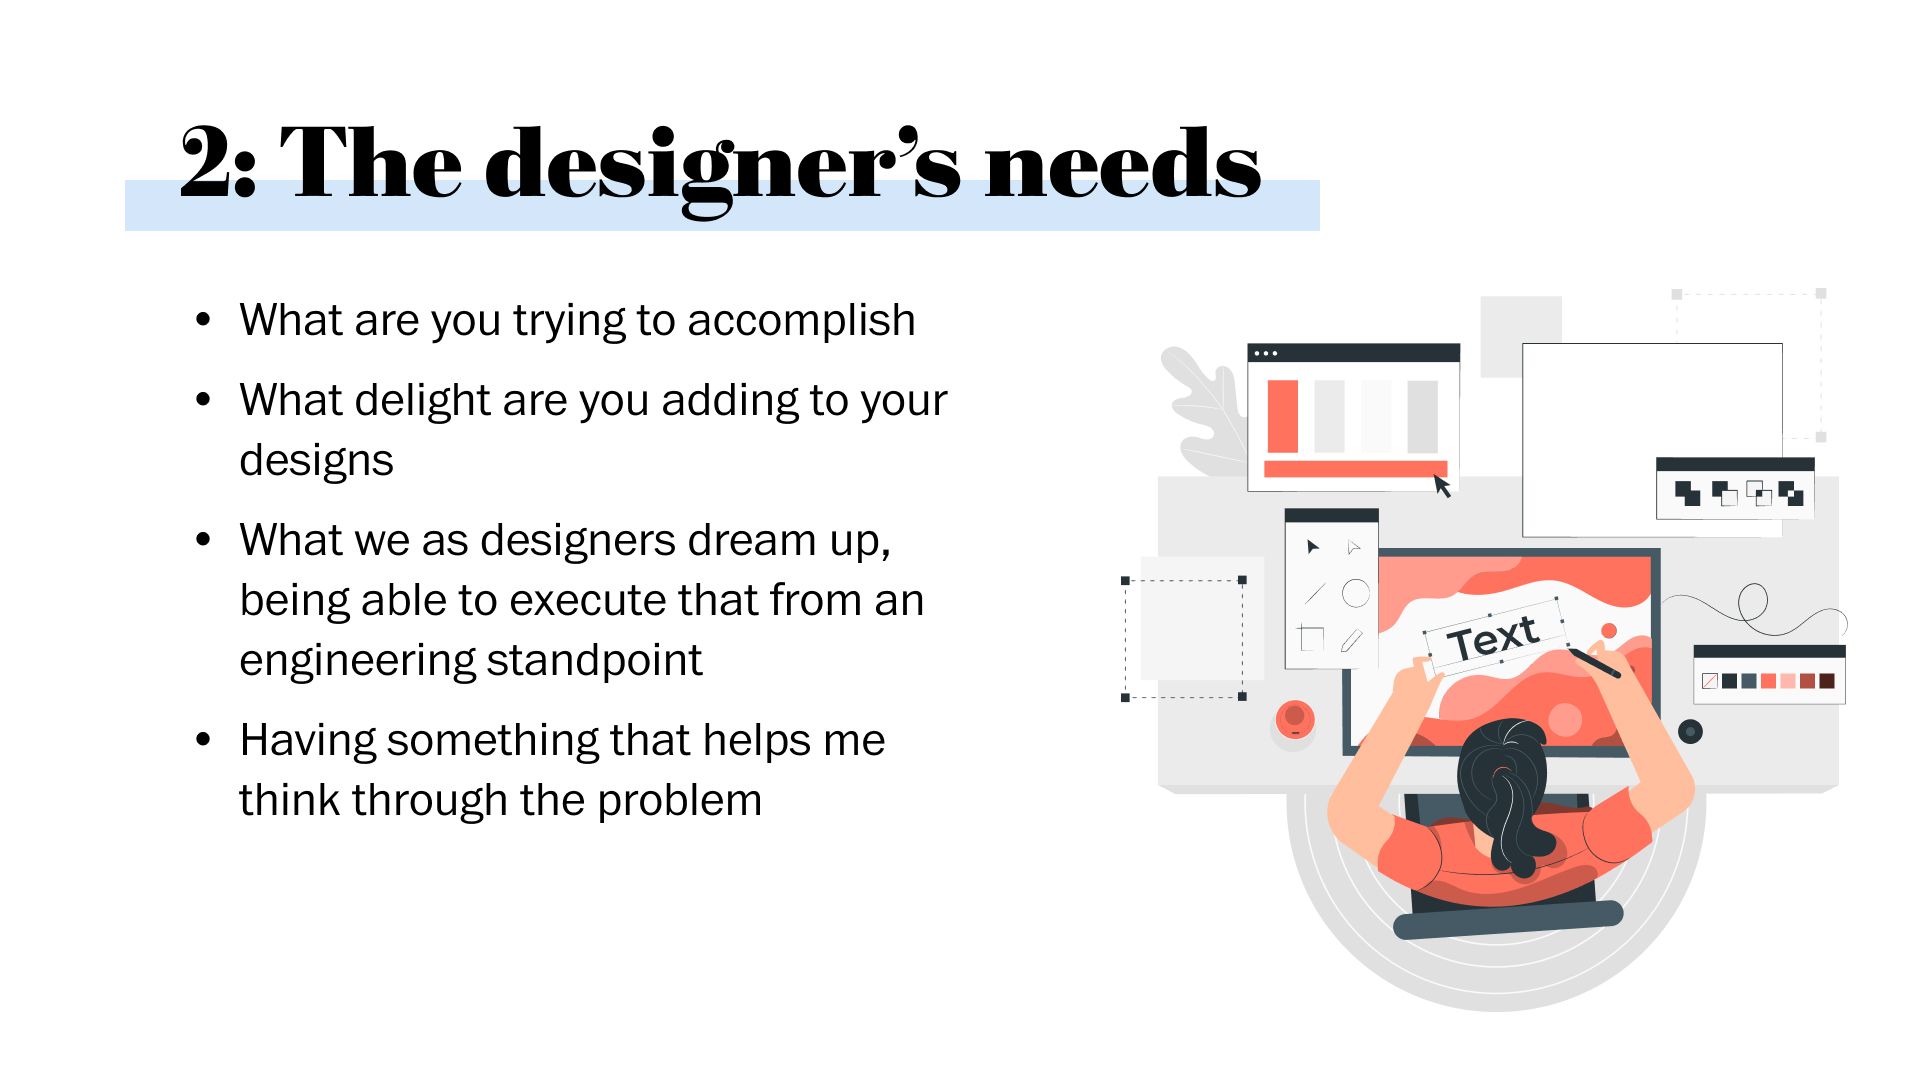 The designers’ needs.